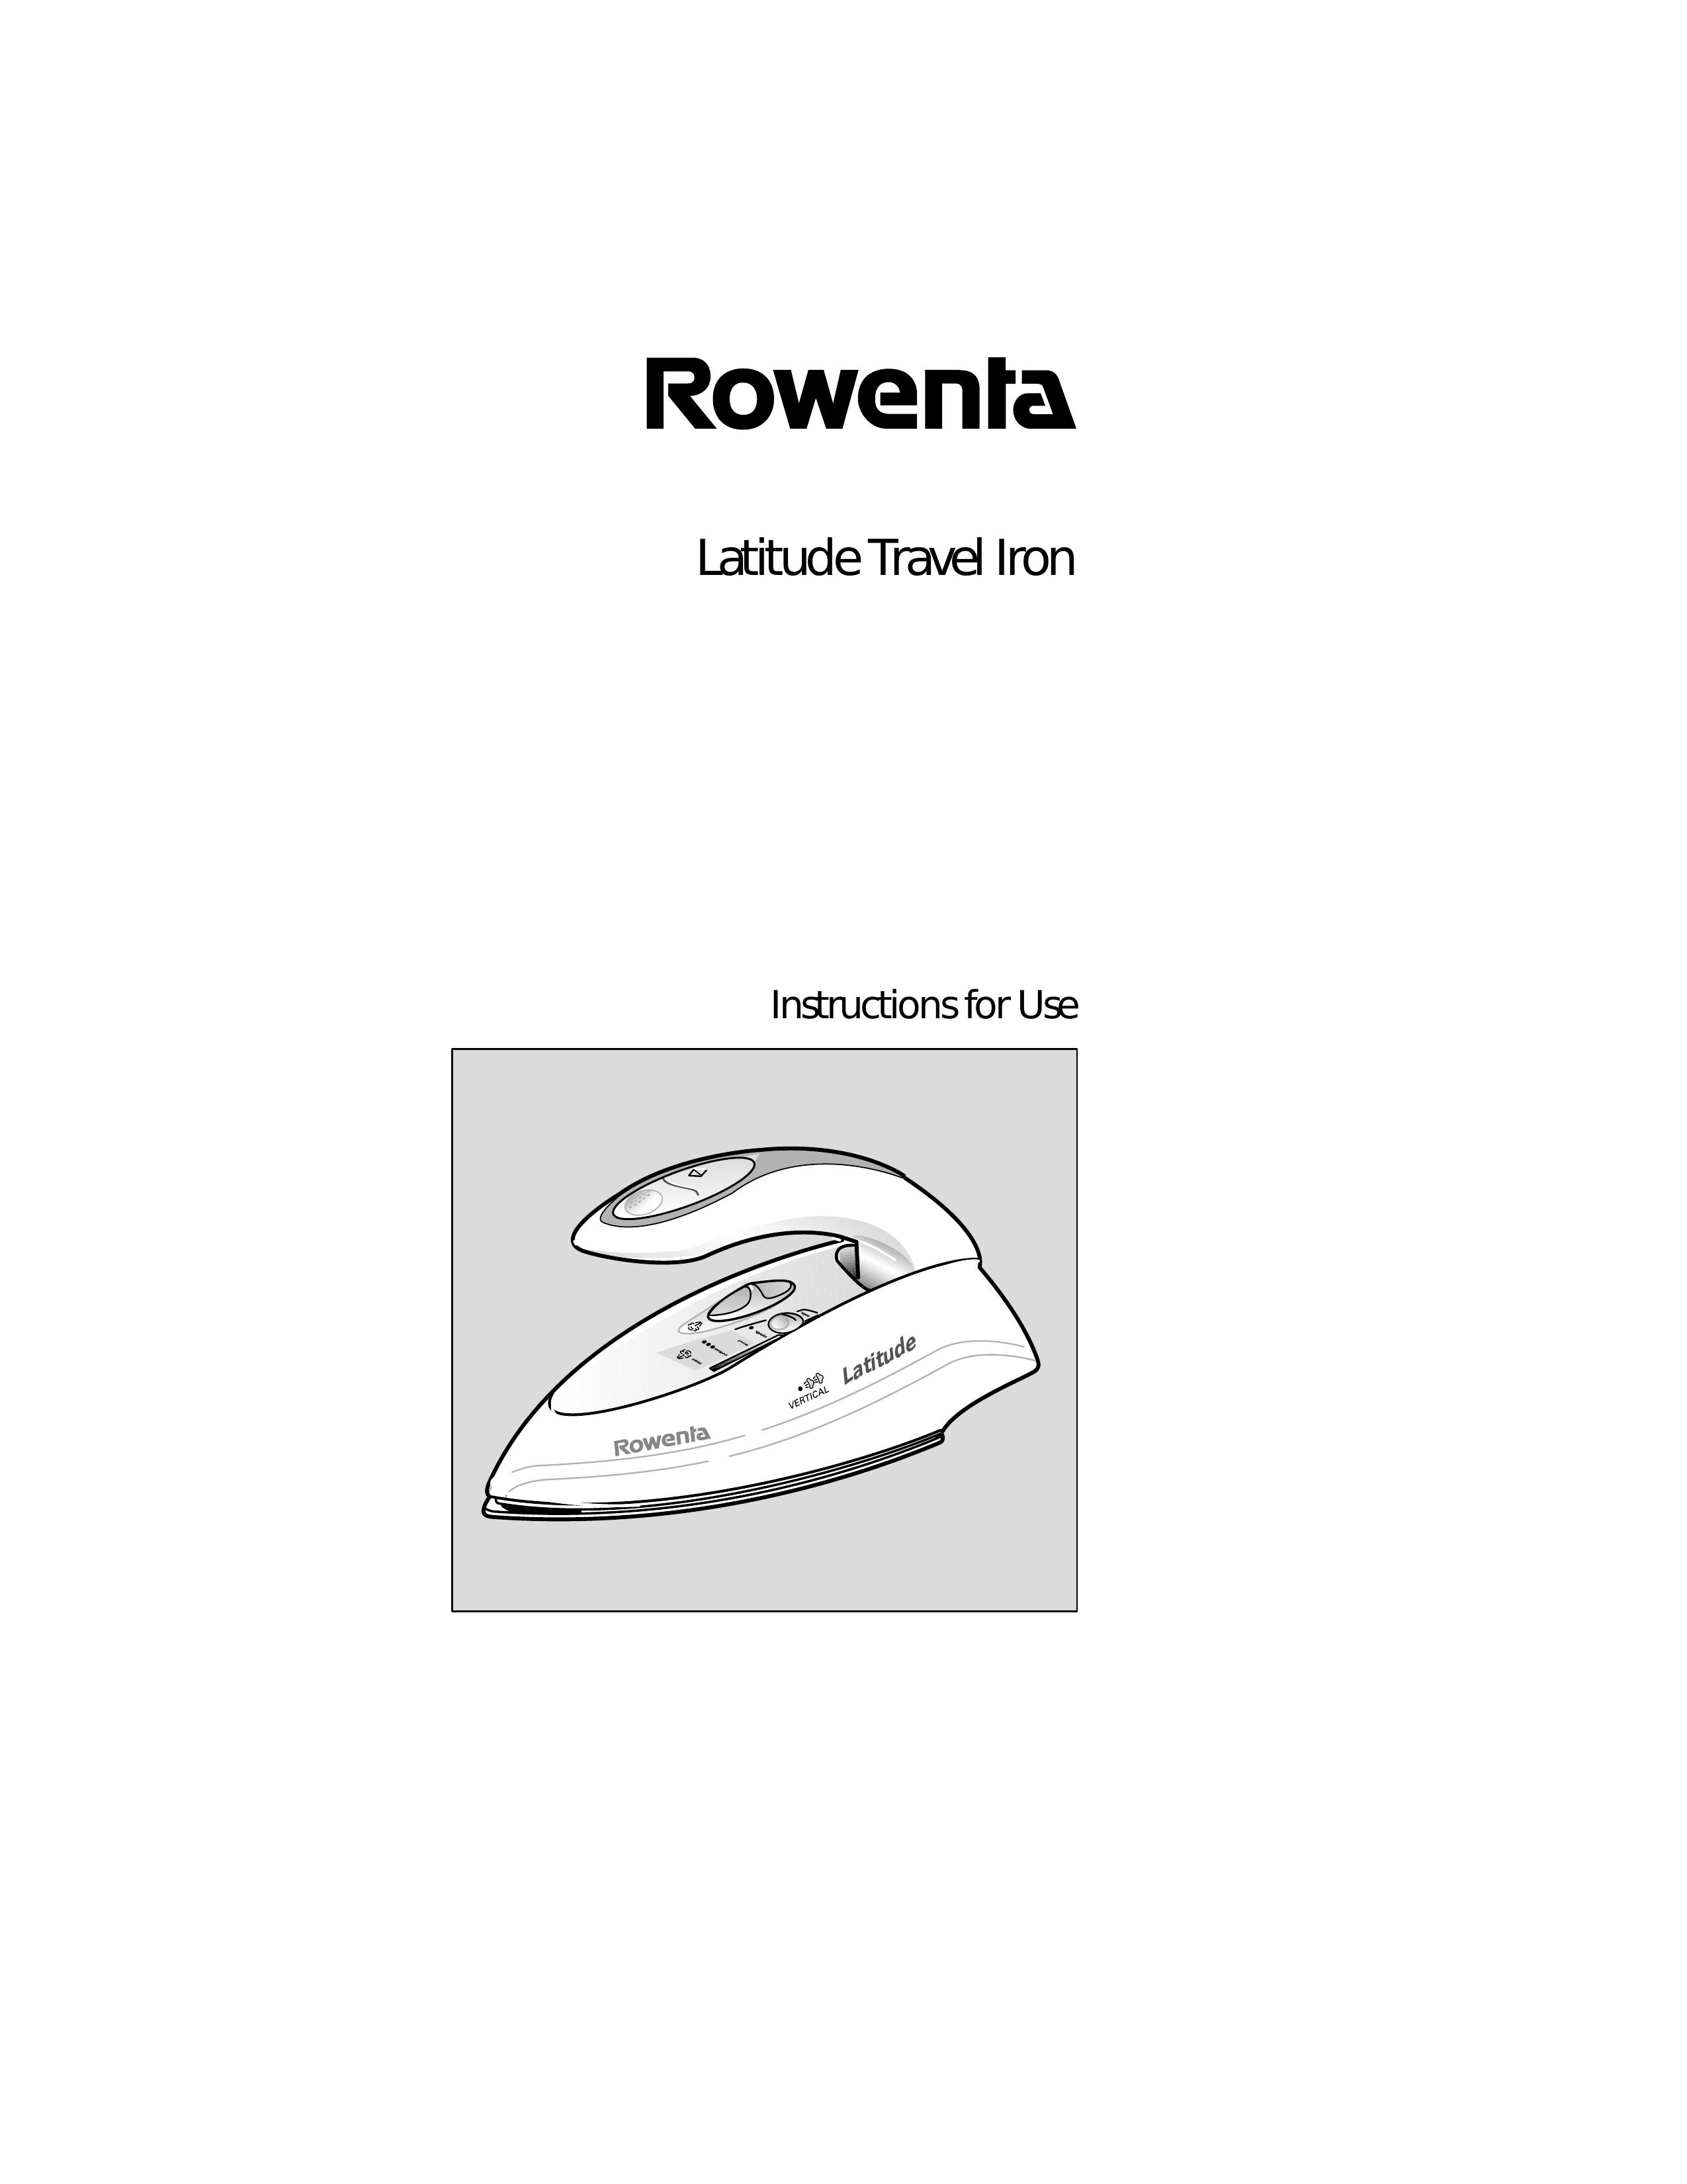 Rowenta Travel Iron Iron User Manual